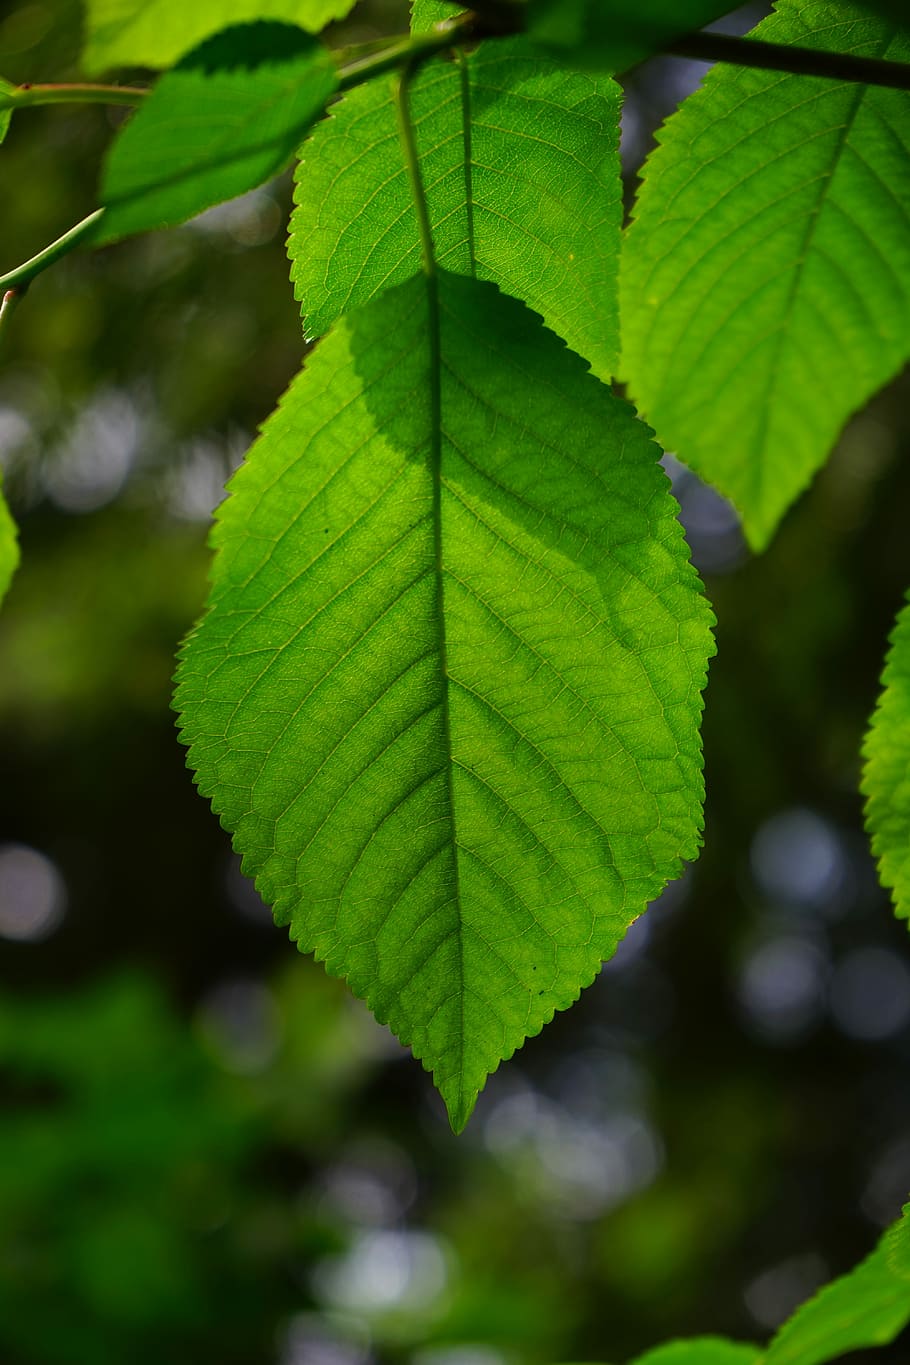 Leaf, Ribs, Hornbeam, Leaves, Green, leaf ribs, color, shades of green